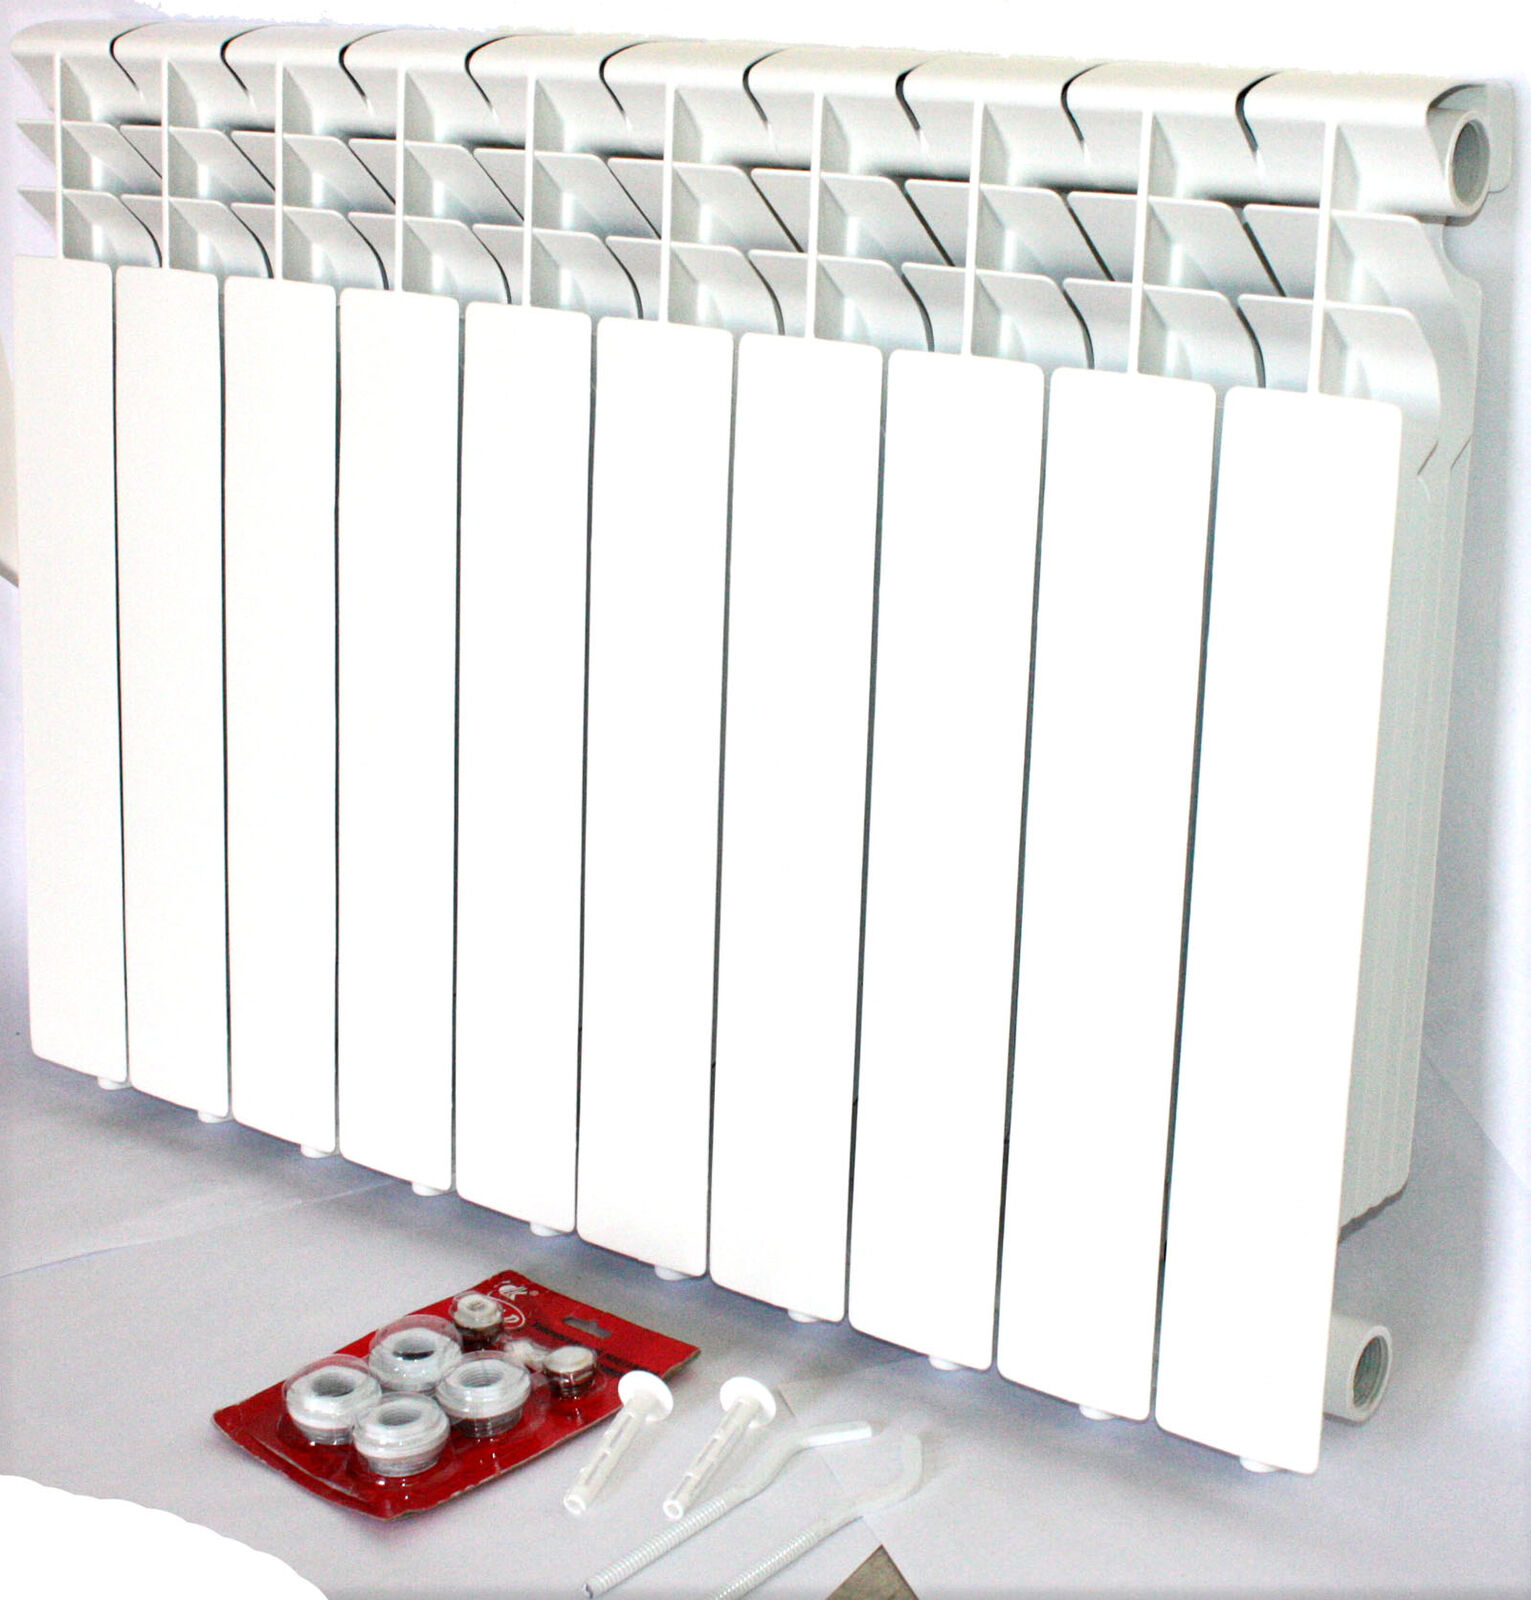 Hydronic Aluminium Heating Radiator 10 Section Installation Kit 5000 BTU White